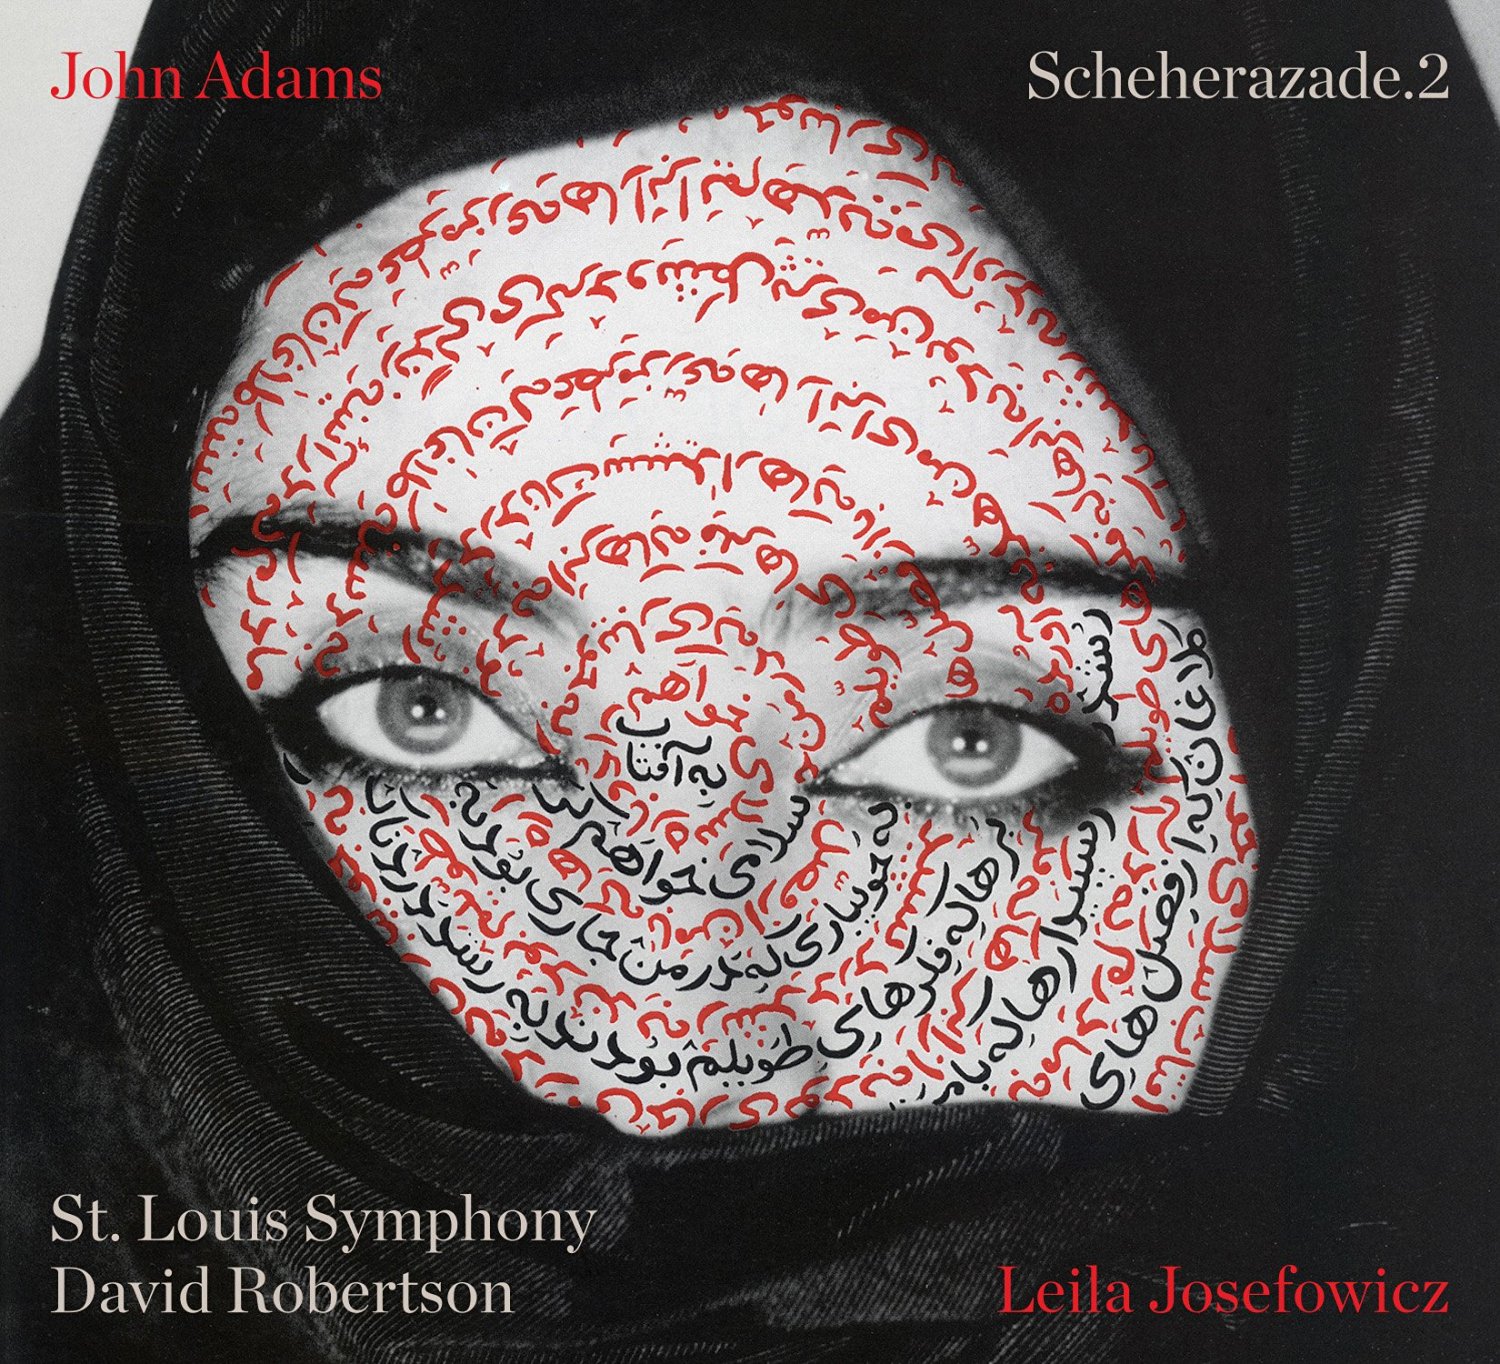 John Adams - Scheherazade.2 | St. Louis Symphony, David Robertson Leila Josefowicz